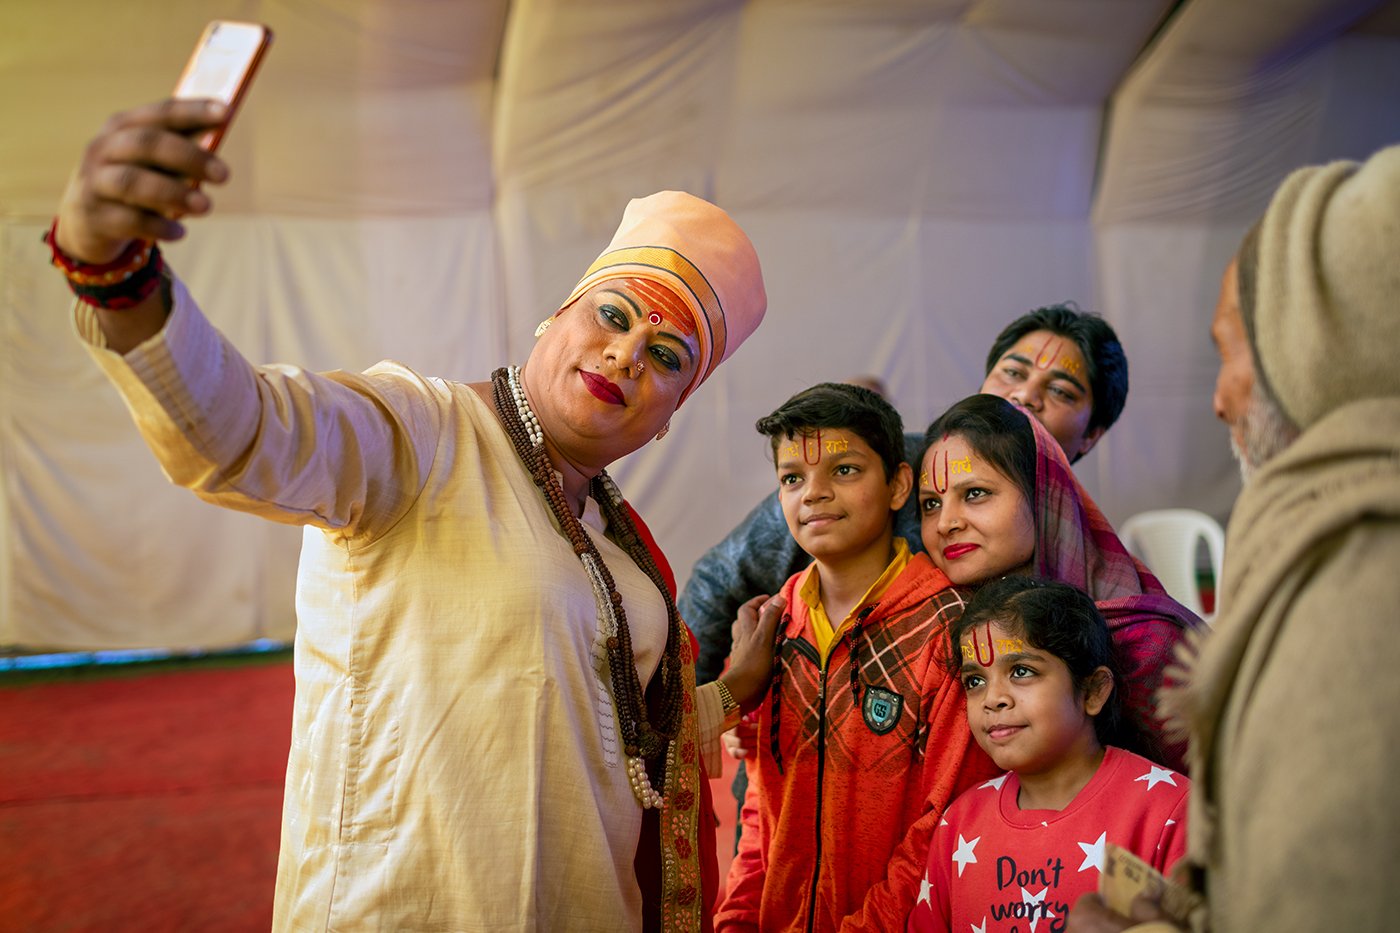 Pavitra Nimbhorakar, a leader and secretary of the Kinnar Akhada, with a devotee family at the 2019 Kumbh Mela.